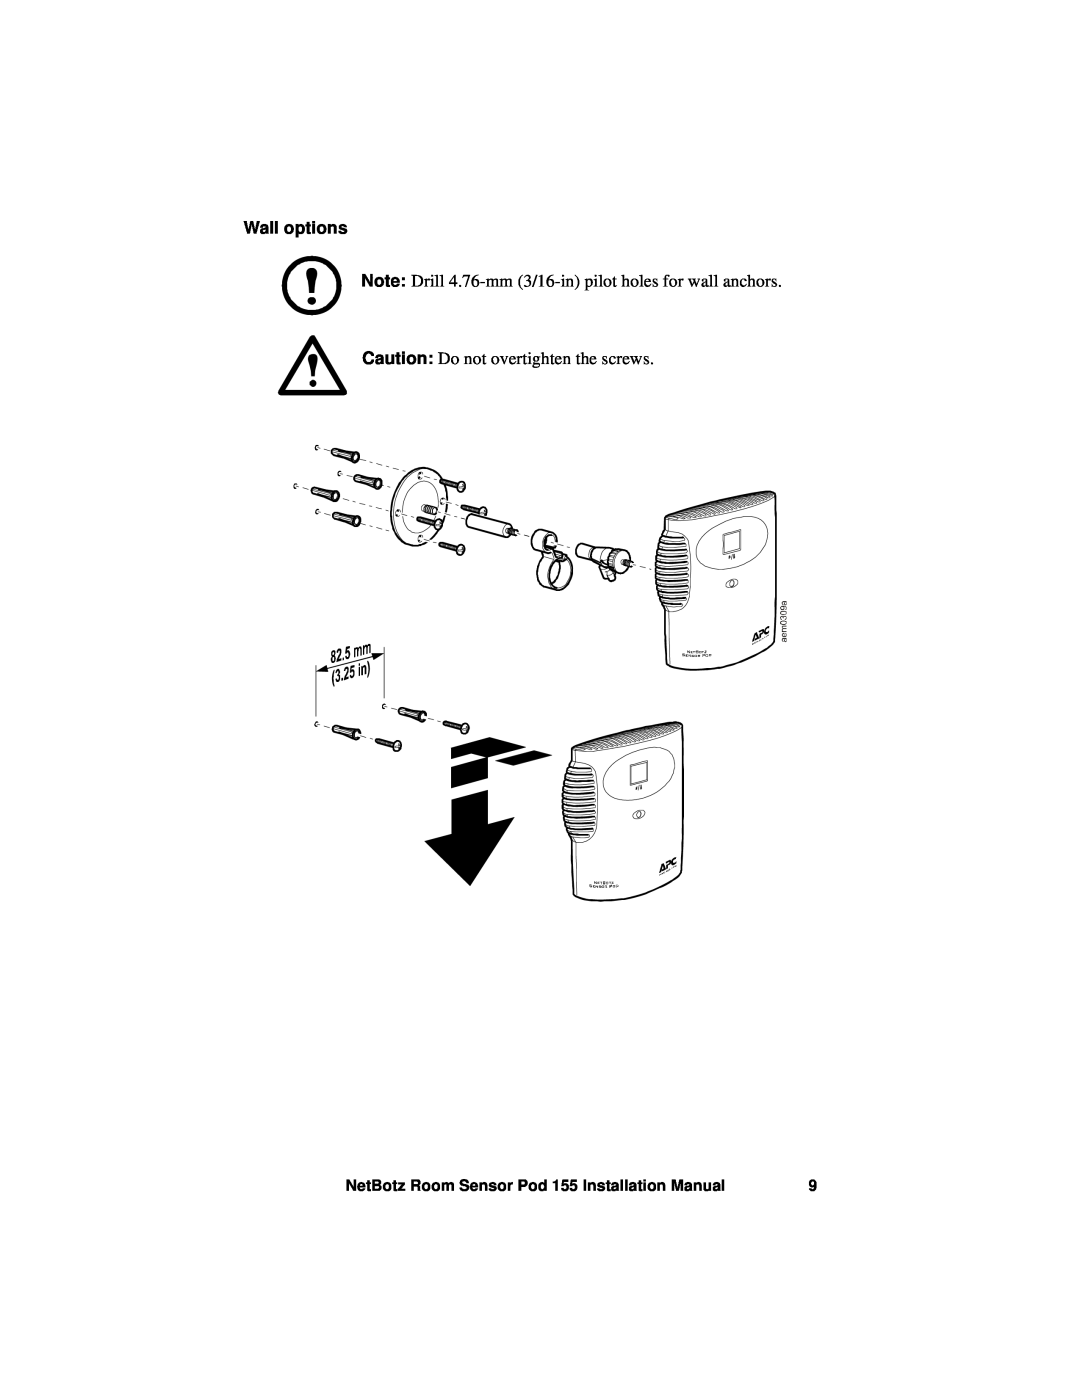 APC NBPD0155 installation manual Wall options, Caution Do not overtighten the screws 